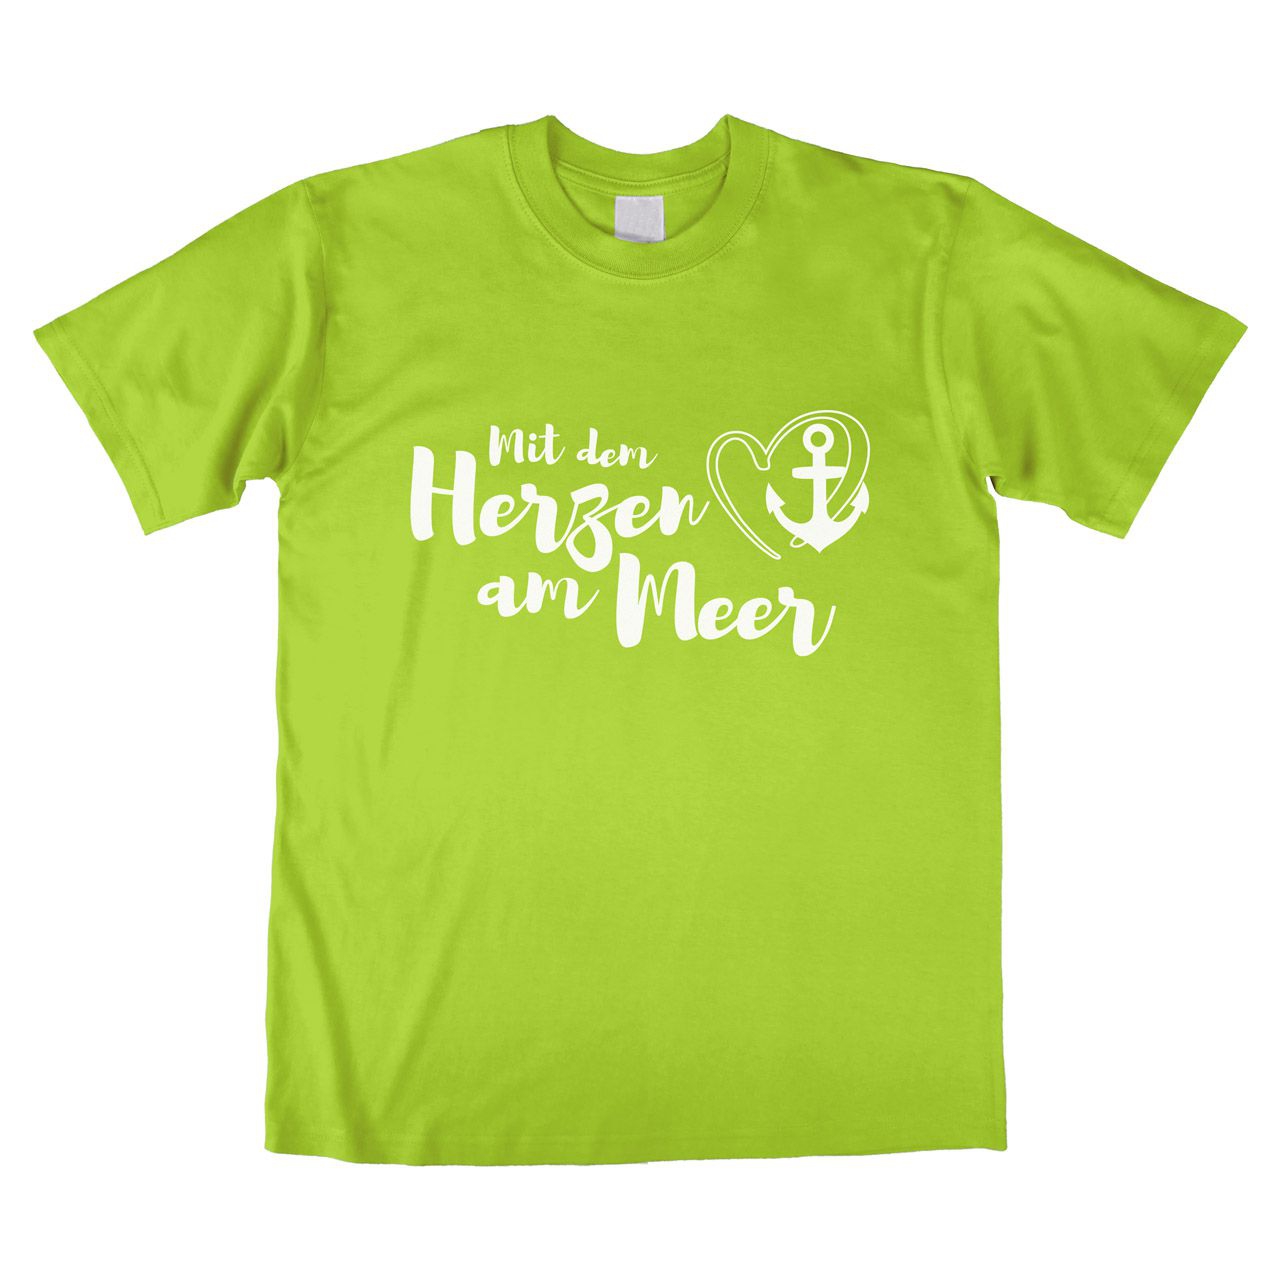 Mit dem Herzen am Meer Unisex T-Shirt hellgrün Medium